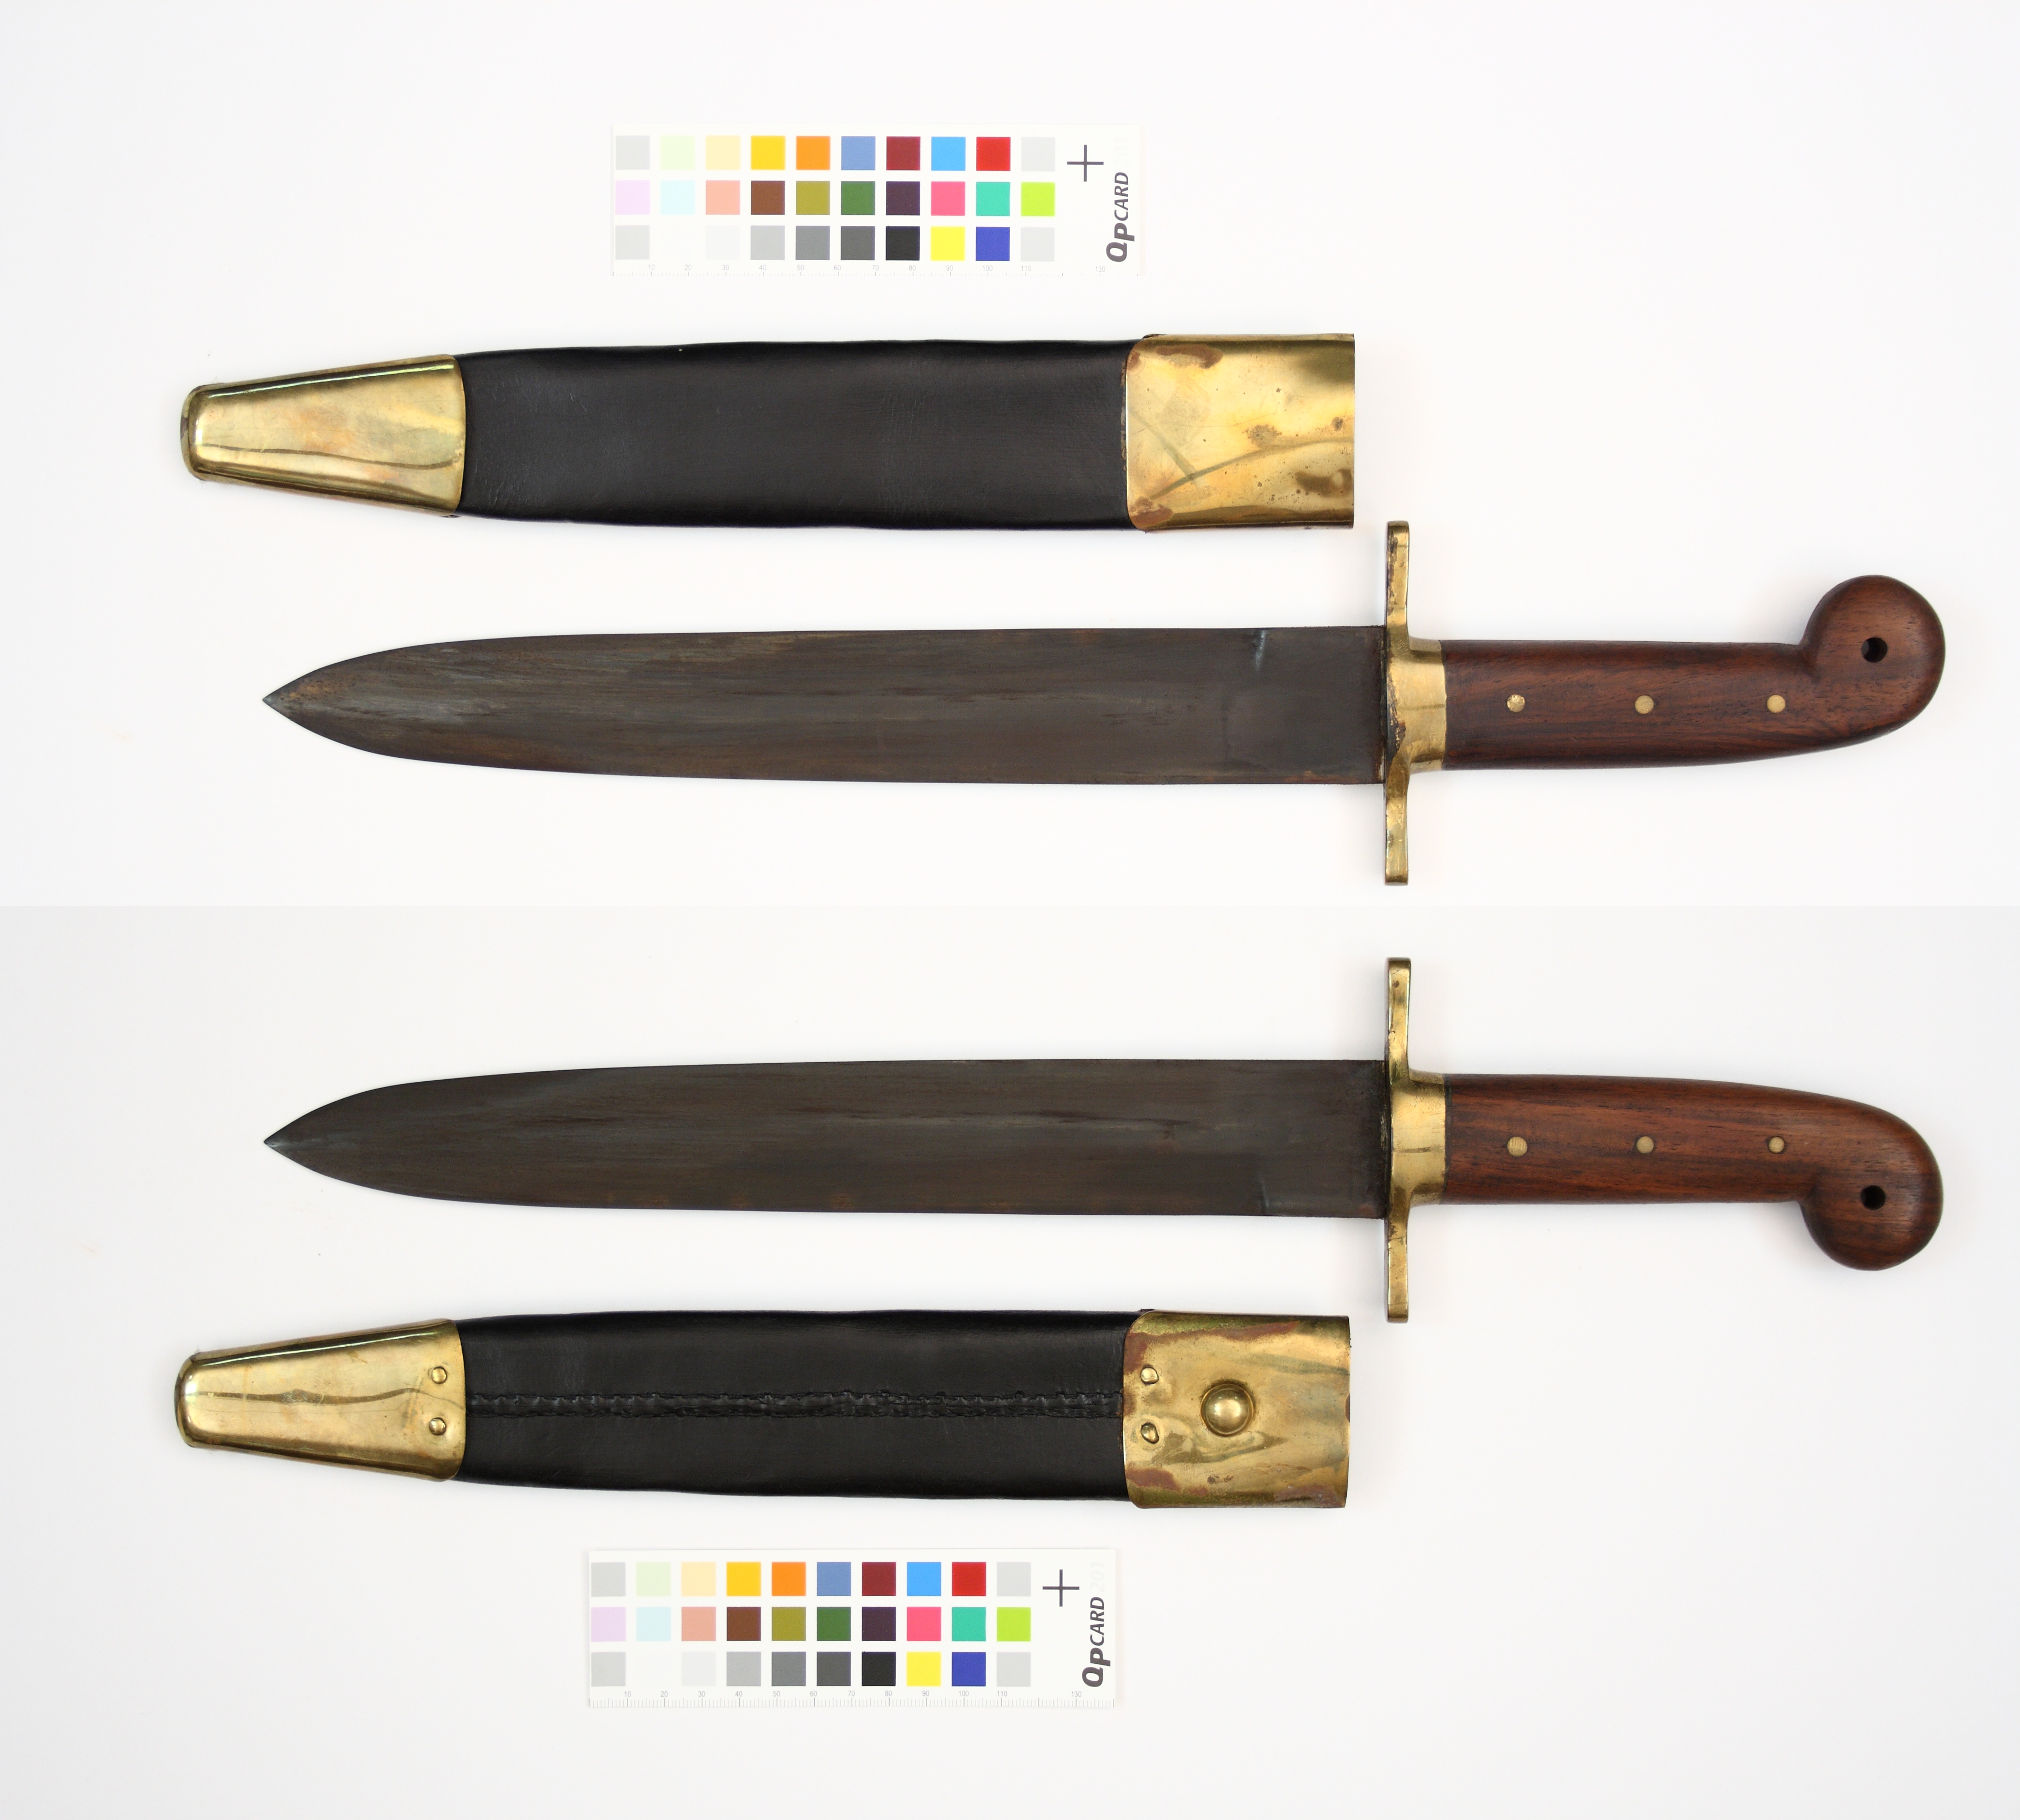 Reproduction of Patt 1849 rifleman's Knife